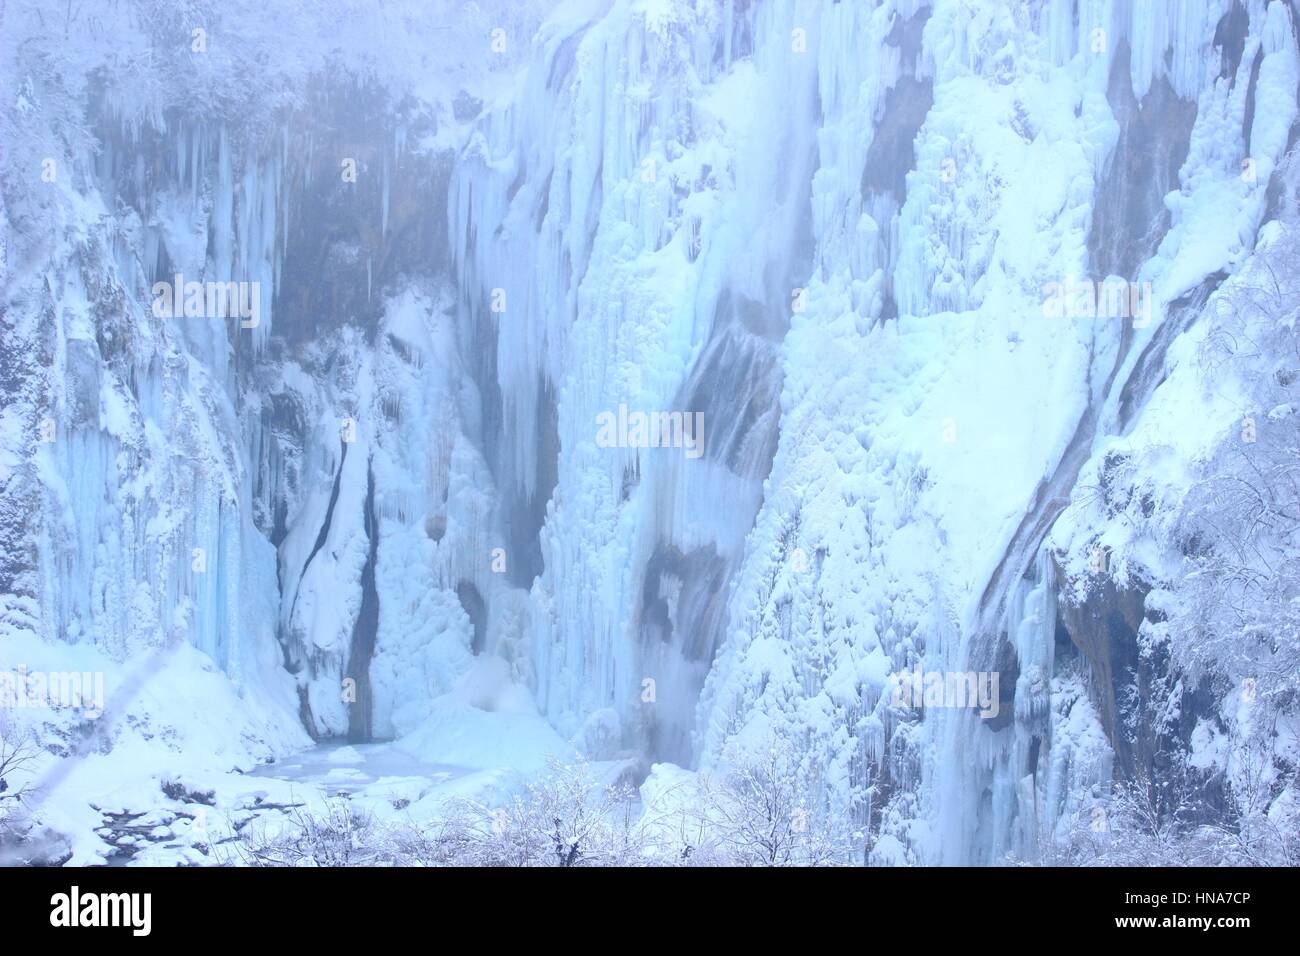 Plitvice lakes, World famous National park in Croatia, UNESCO world heritage, frozen waterfalls, cold winter scene Stock Photo